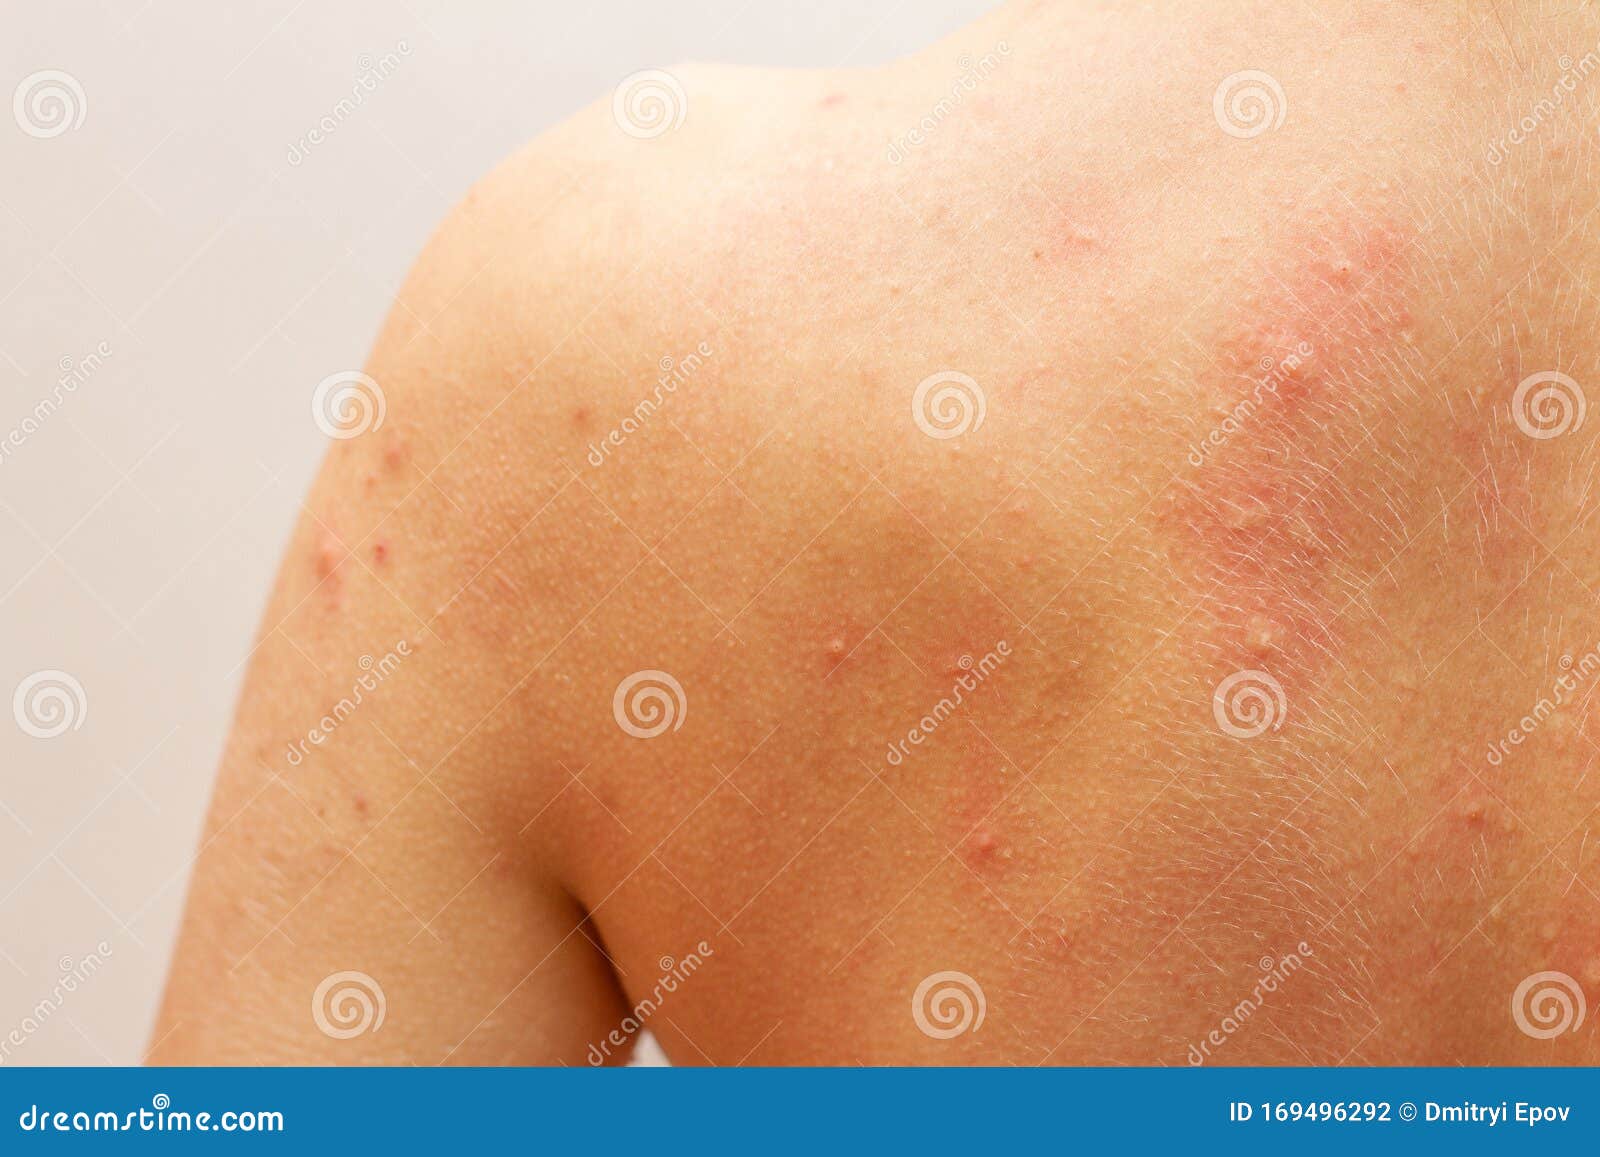 urticaria allergy on skin back, close up